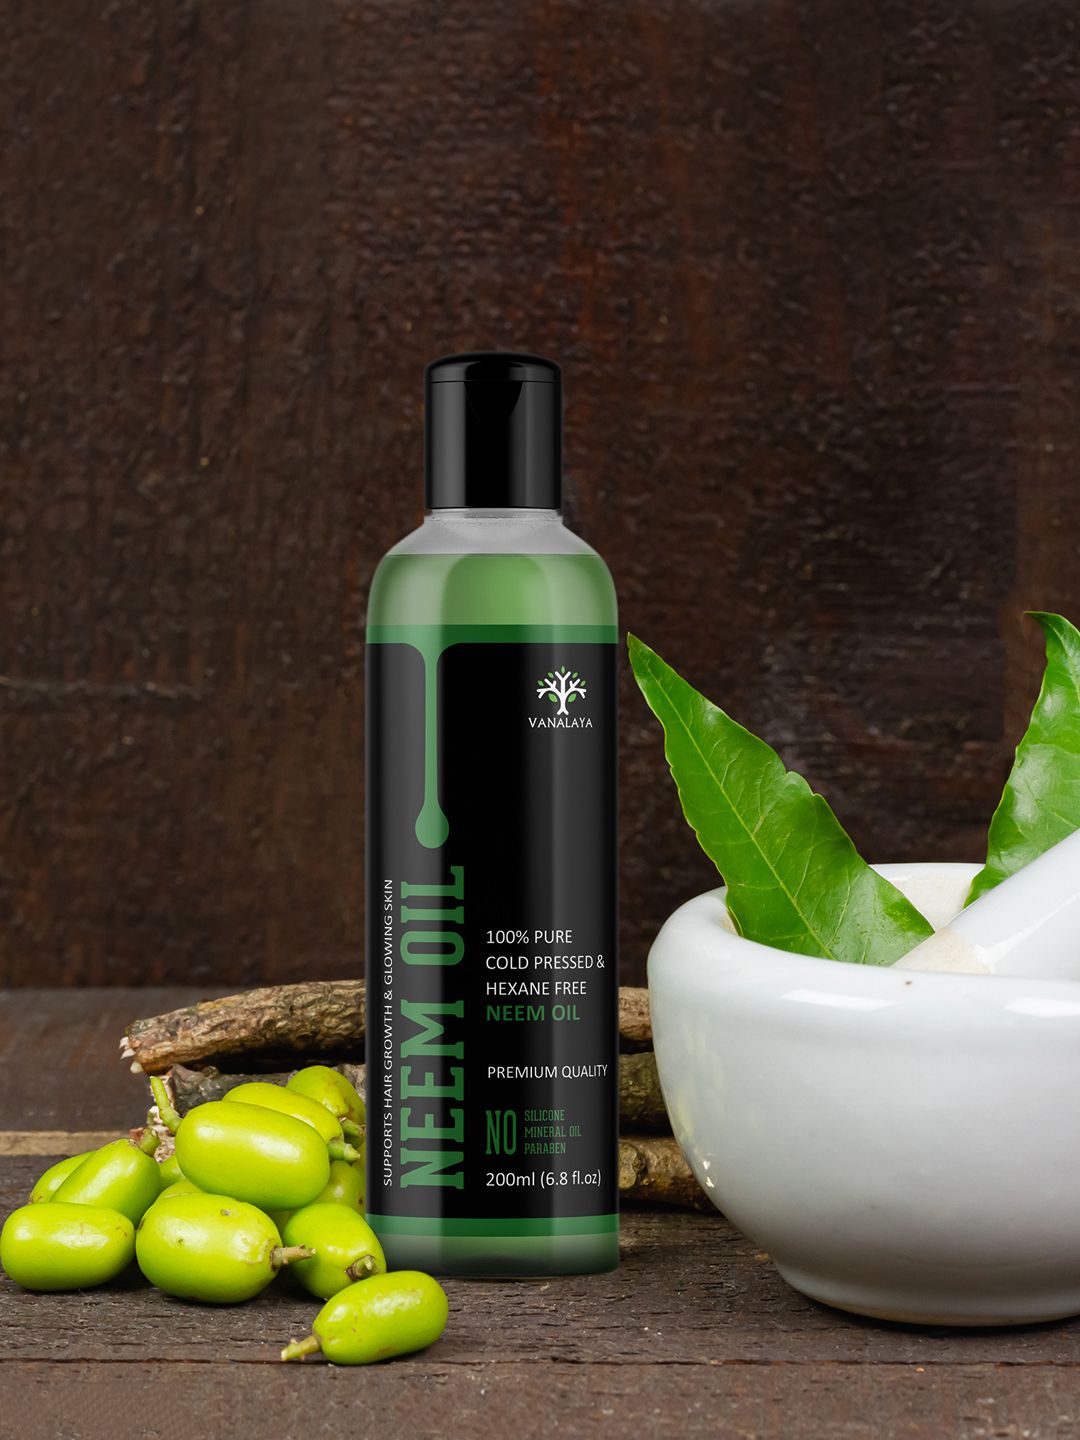 VANALAYA Cold Pressed Neem Oil For Hair & Skin Care - 200 ml Price in India